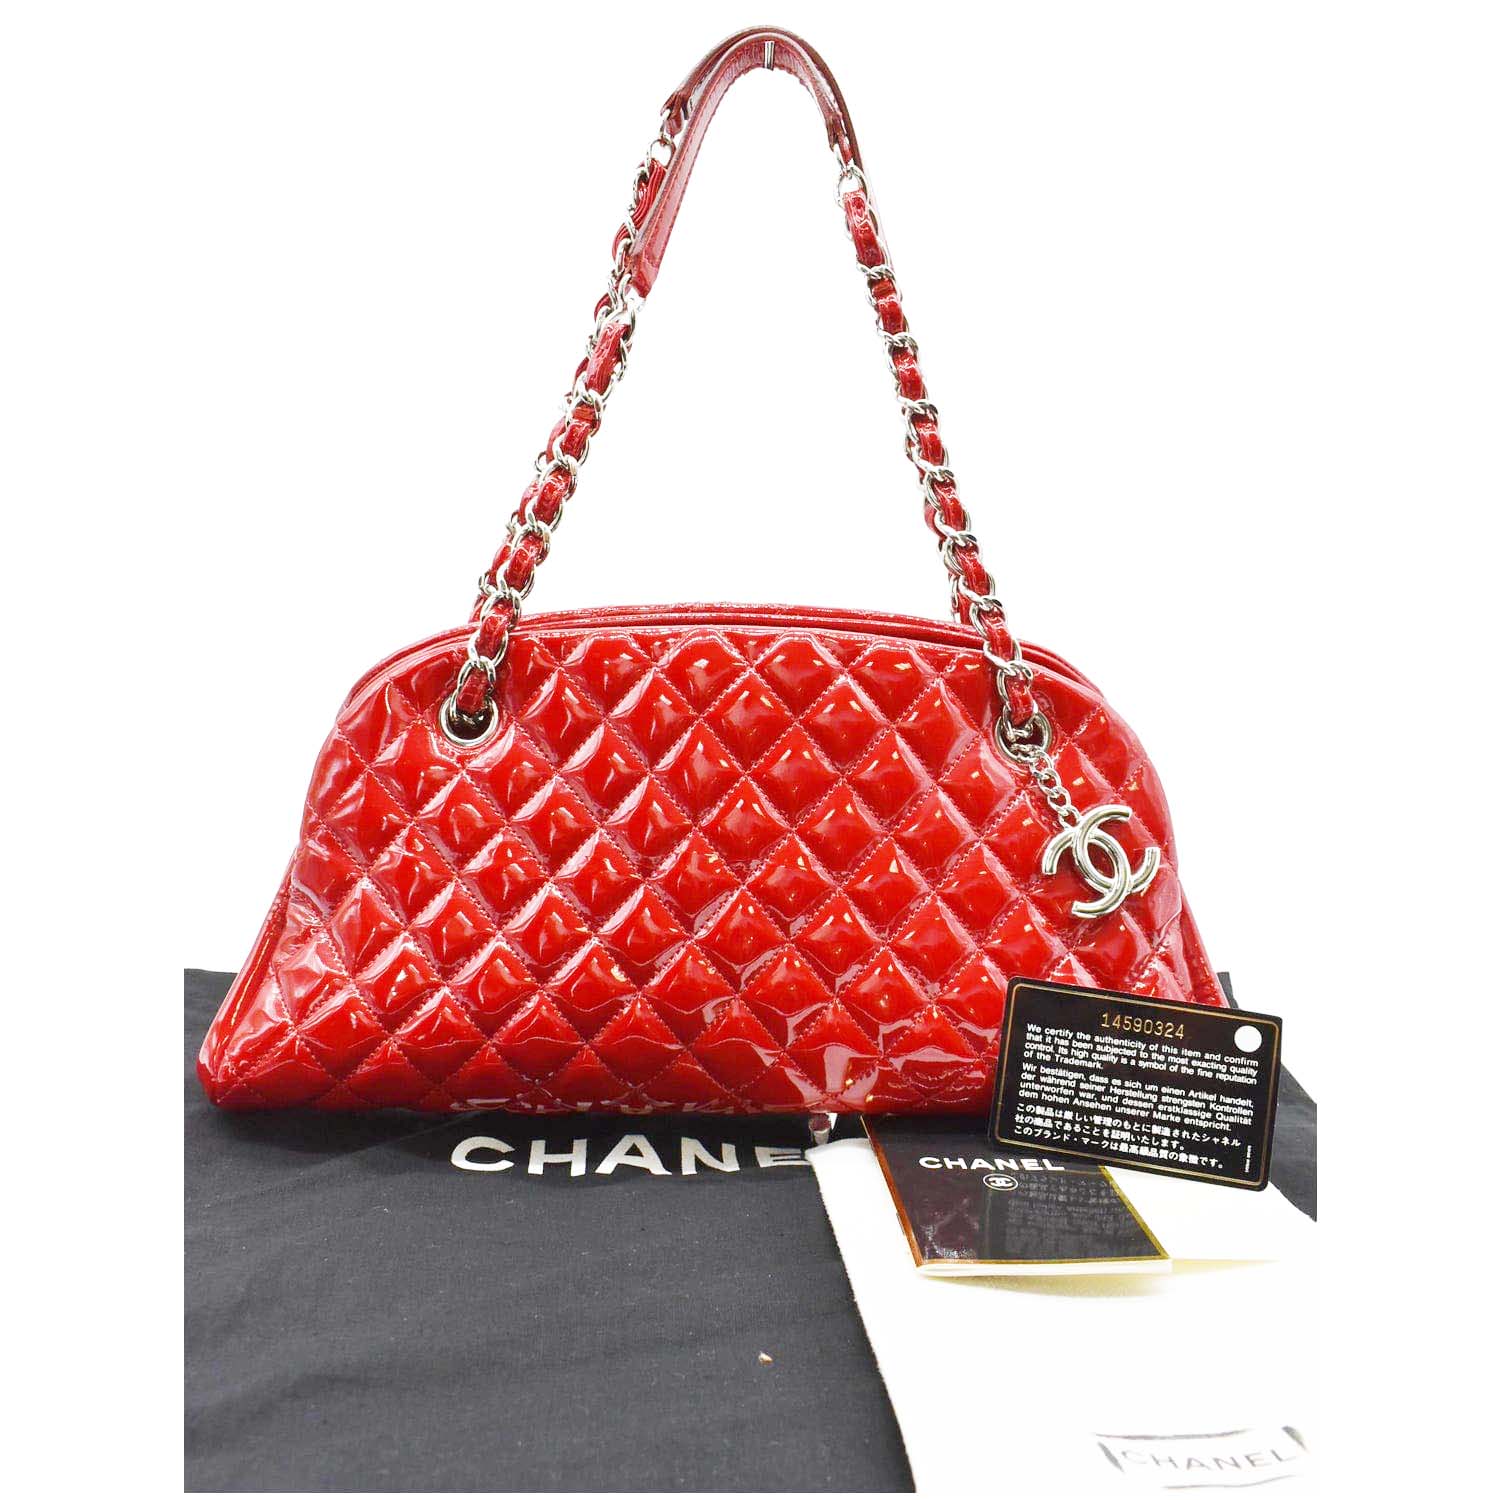 Chanel Just Mademoiselle Bag - 14 For Sale on 1stDibs